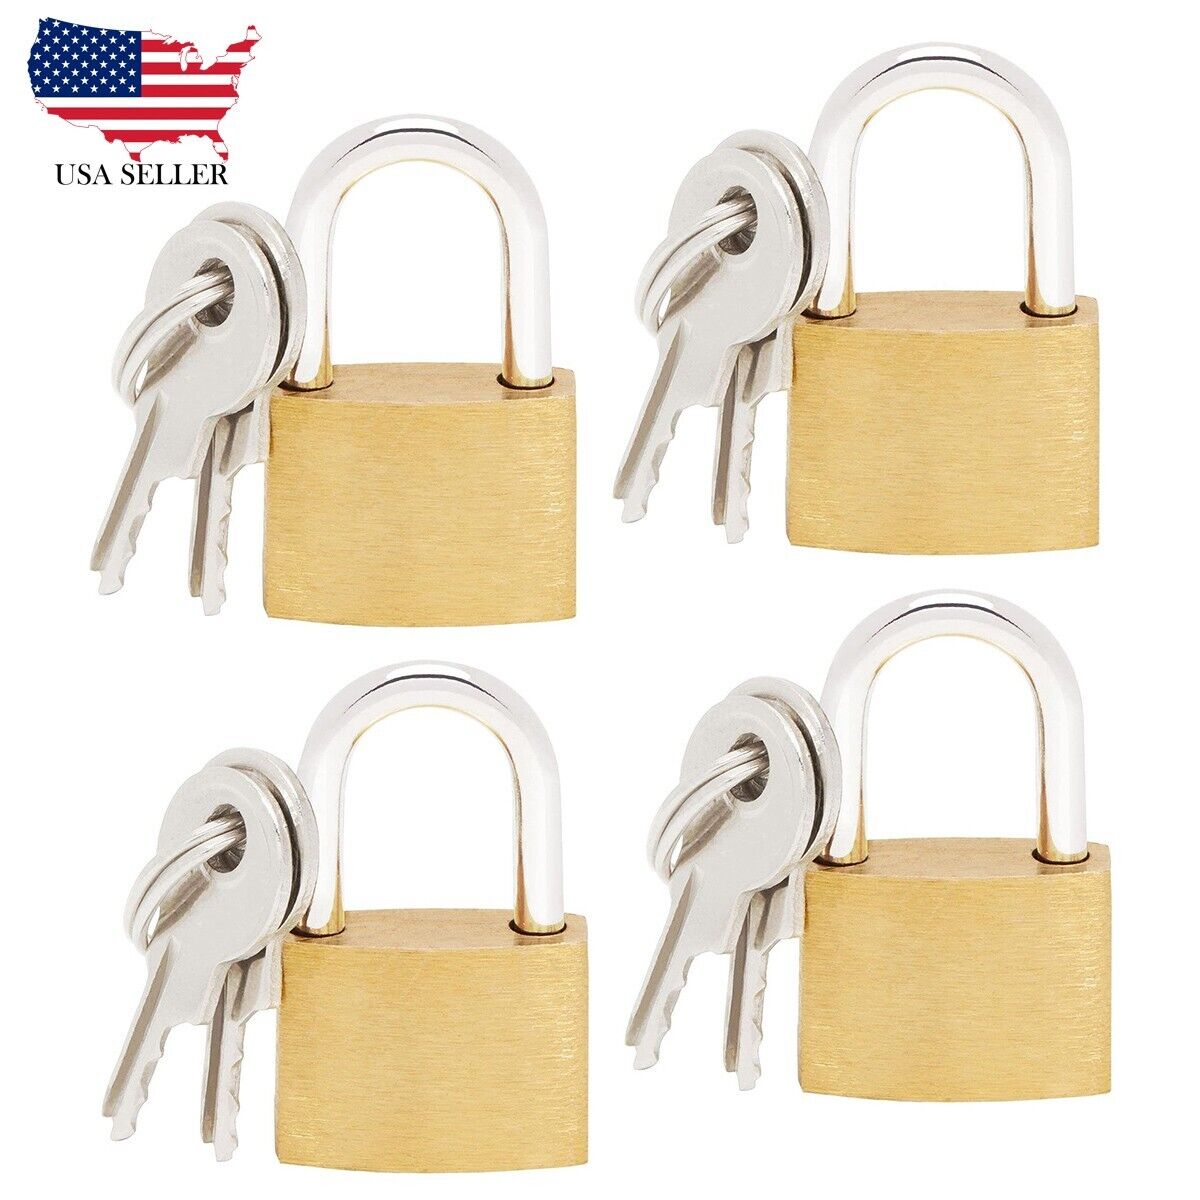 4 Pack Small Locks with Keys, Mini Padlock for Luggage Lock, Backpack Locker